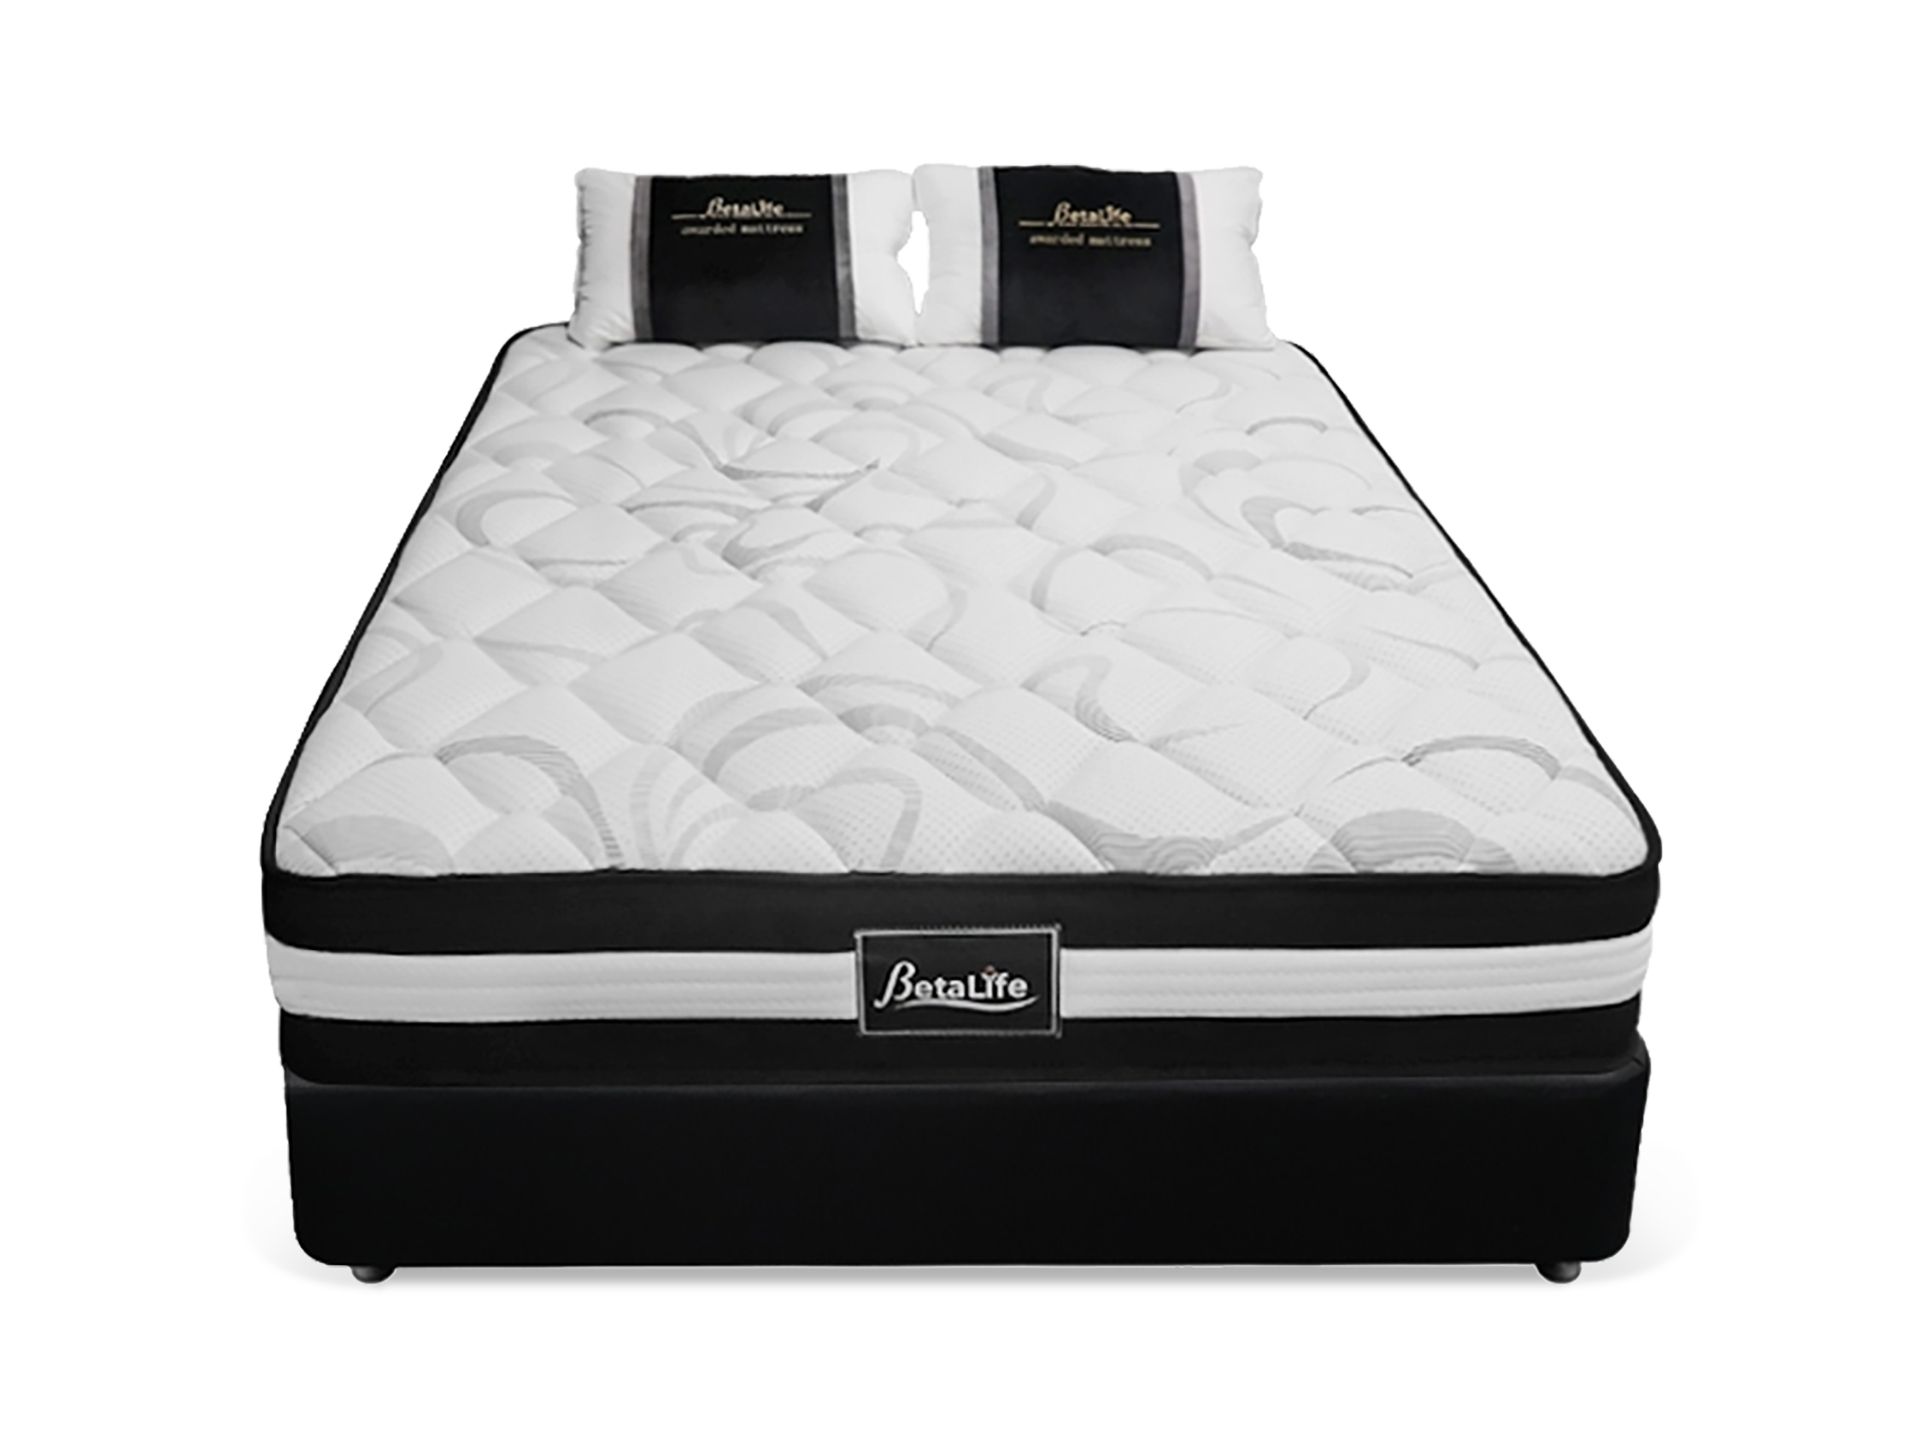 Vinson Fabric Queen Bed with Ultra Comfort Mattress - Black